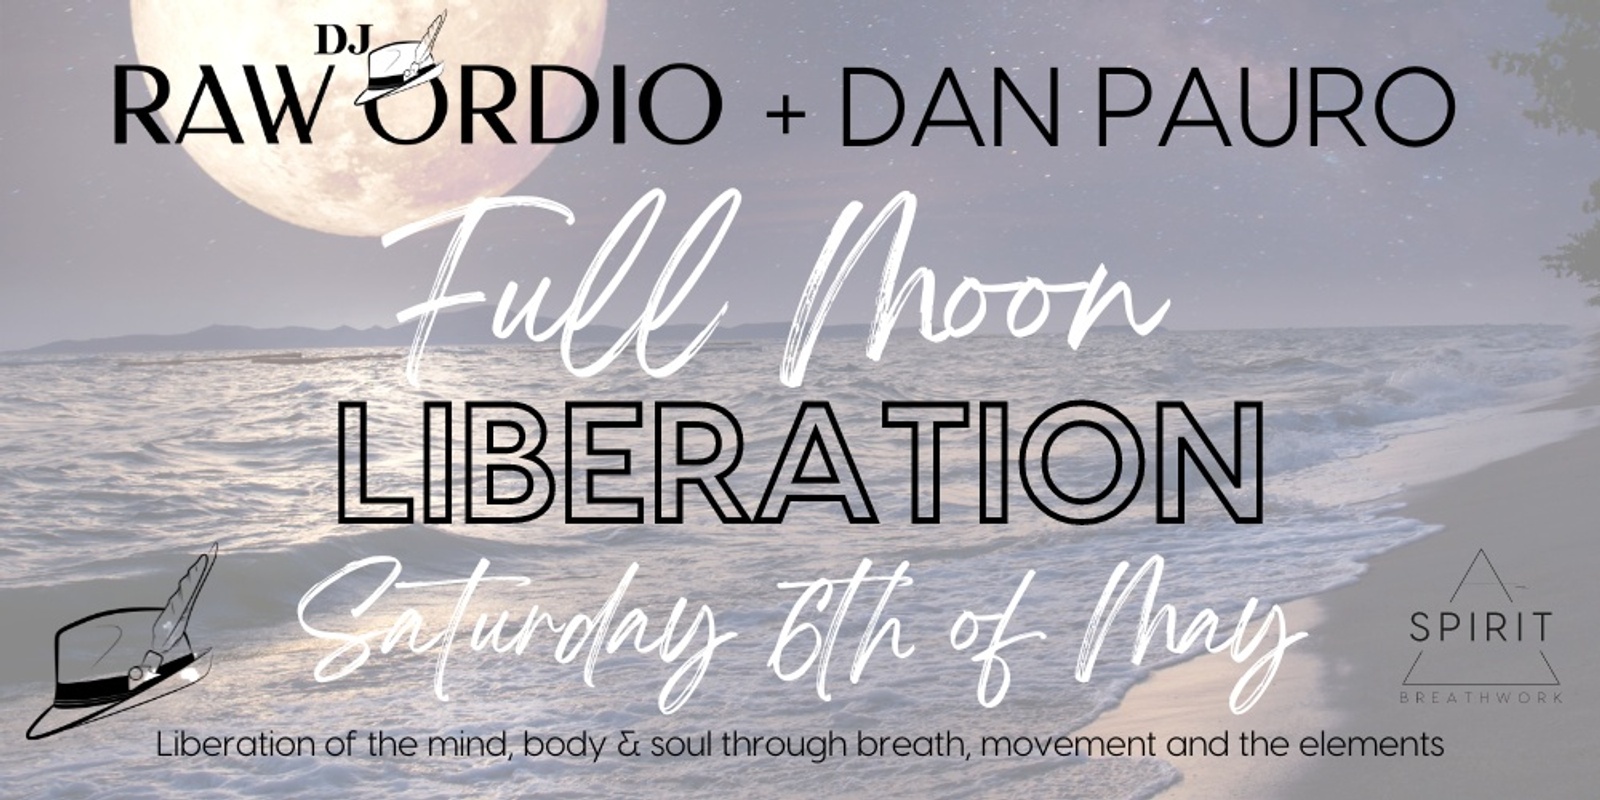 Banner image for Full Moon Liberation | Dan Pauro & DJ Raw Ordio | Saturday 6th May